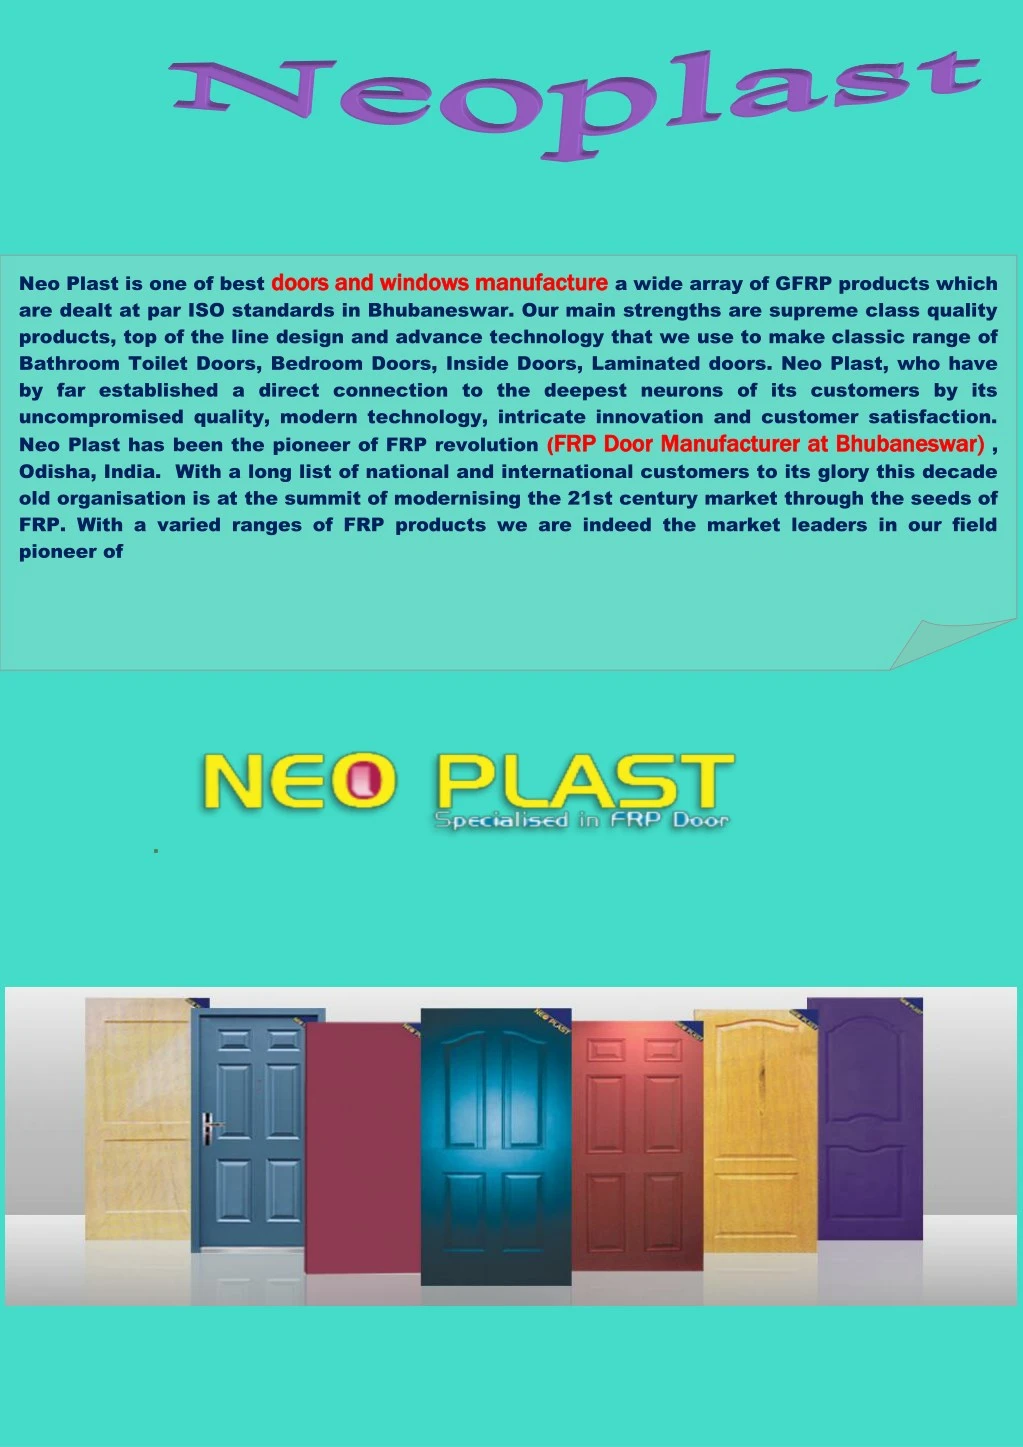 neo plast is one of best doors and windows